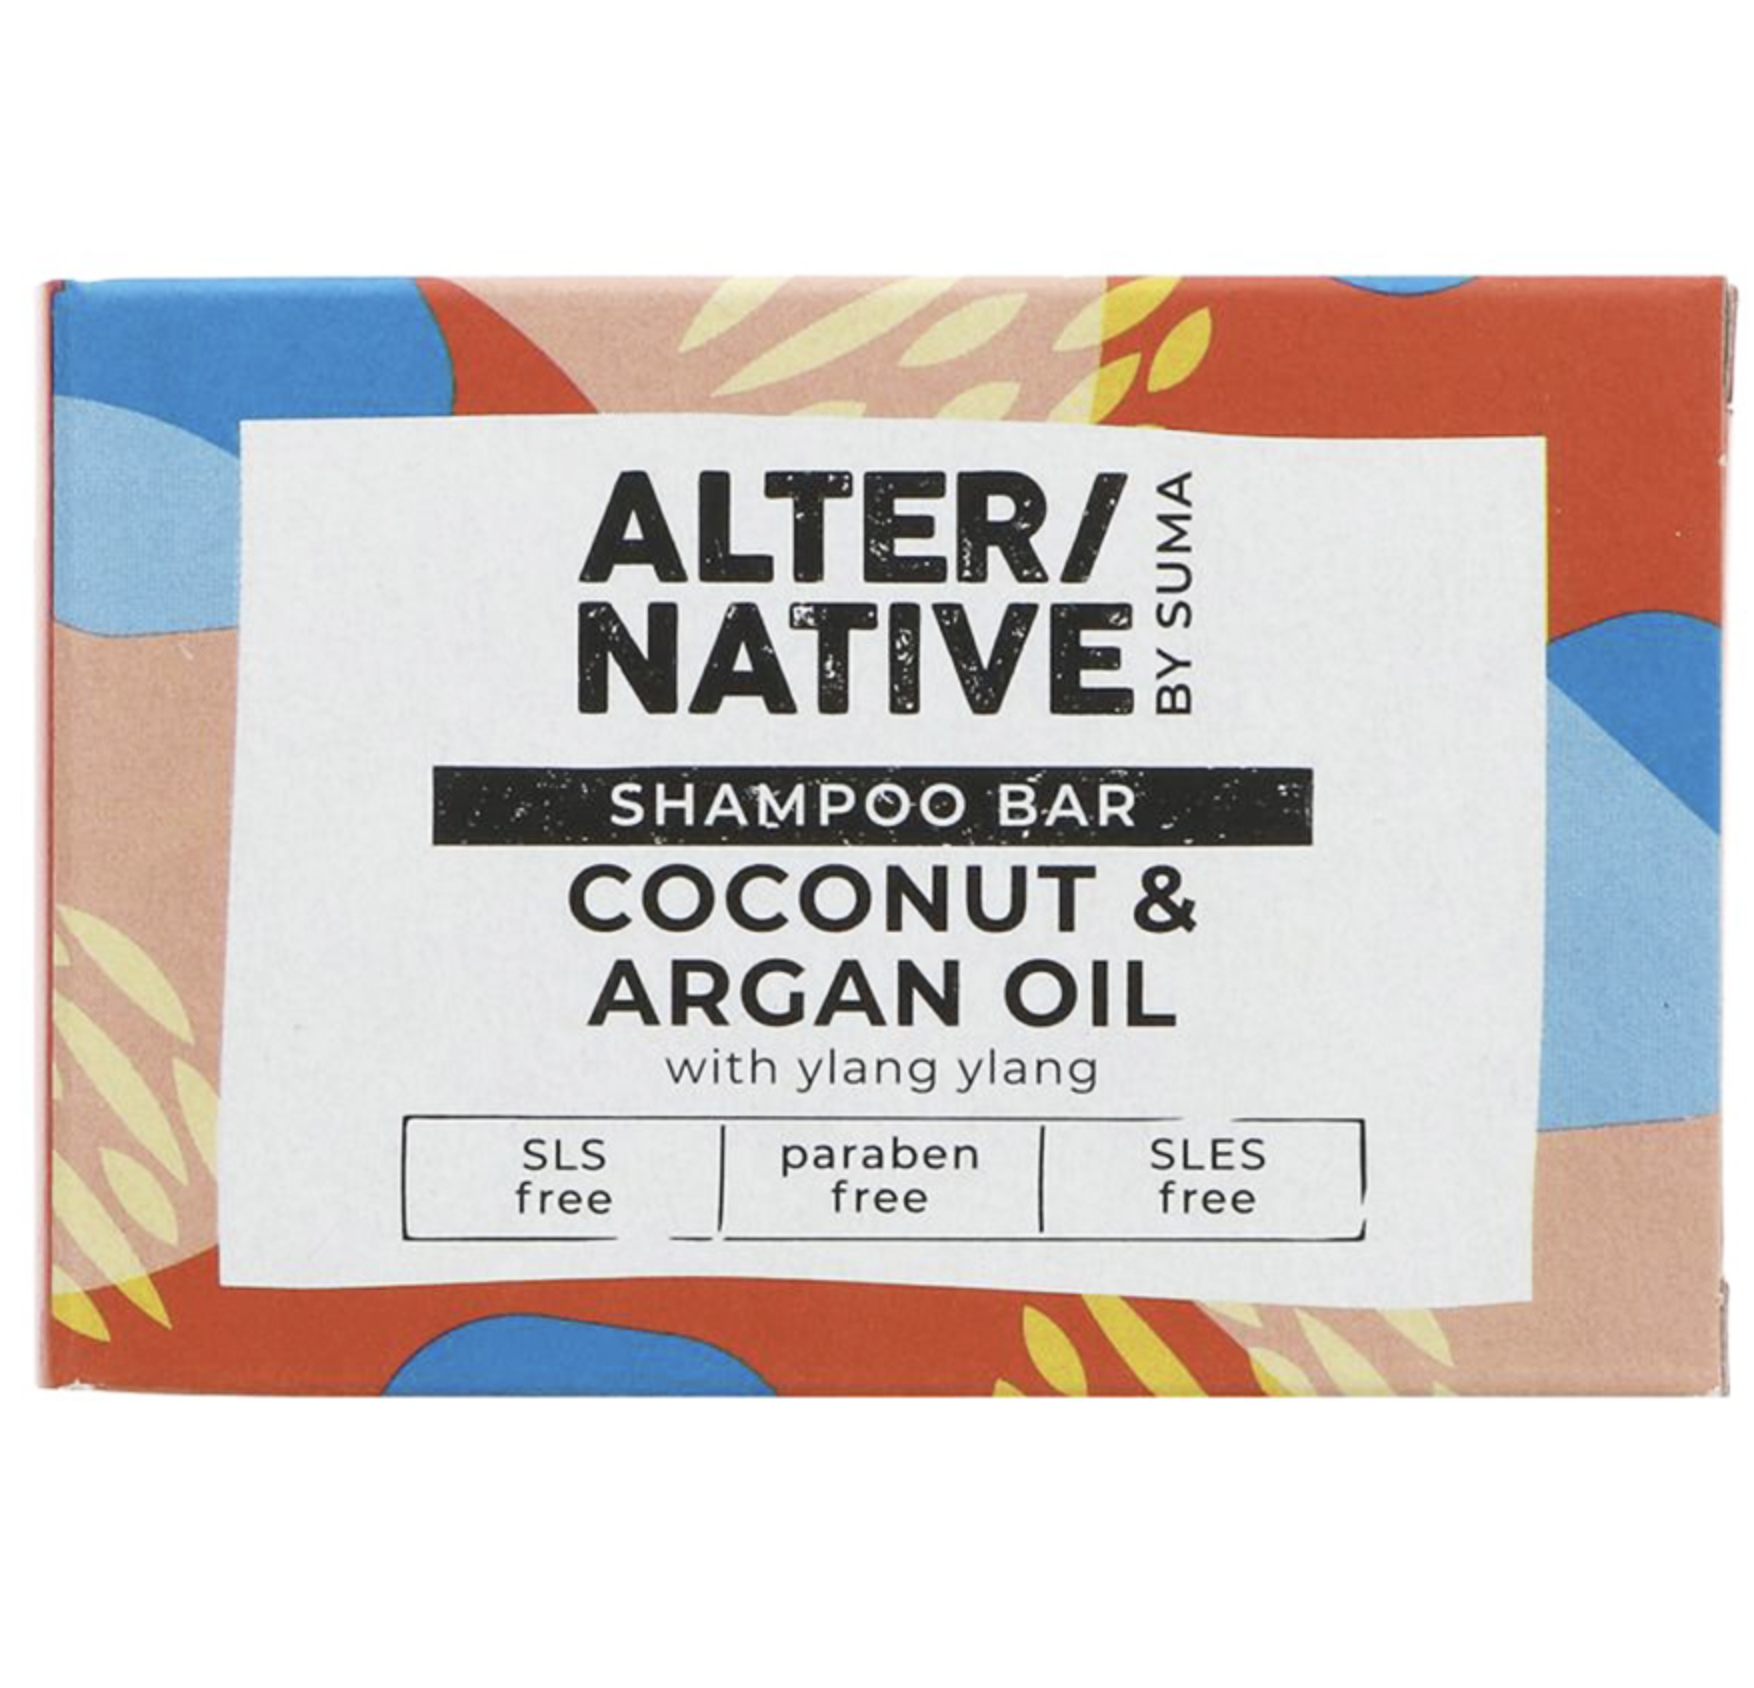 Alter/native Shampoo - Coconut & Argan Oil